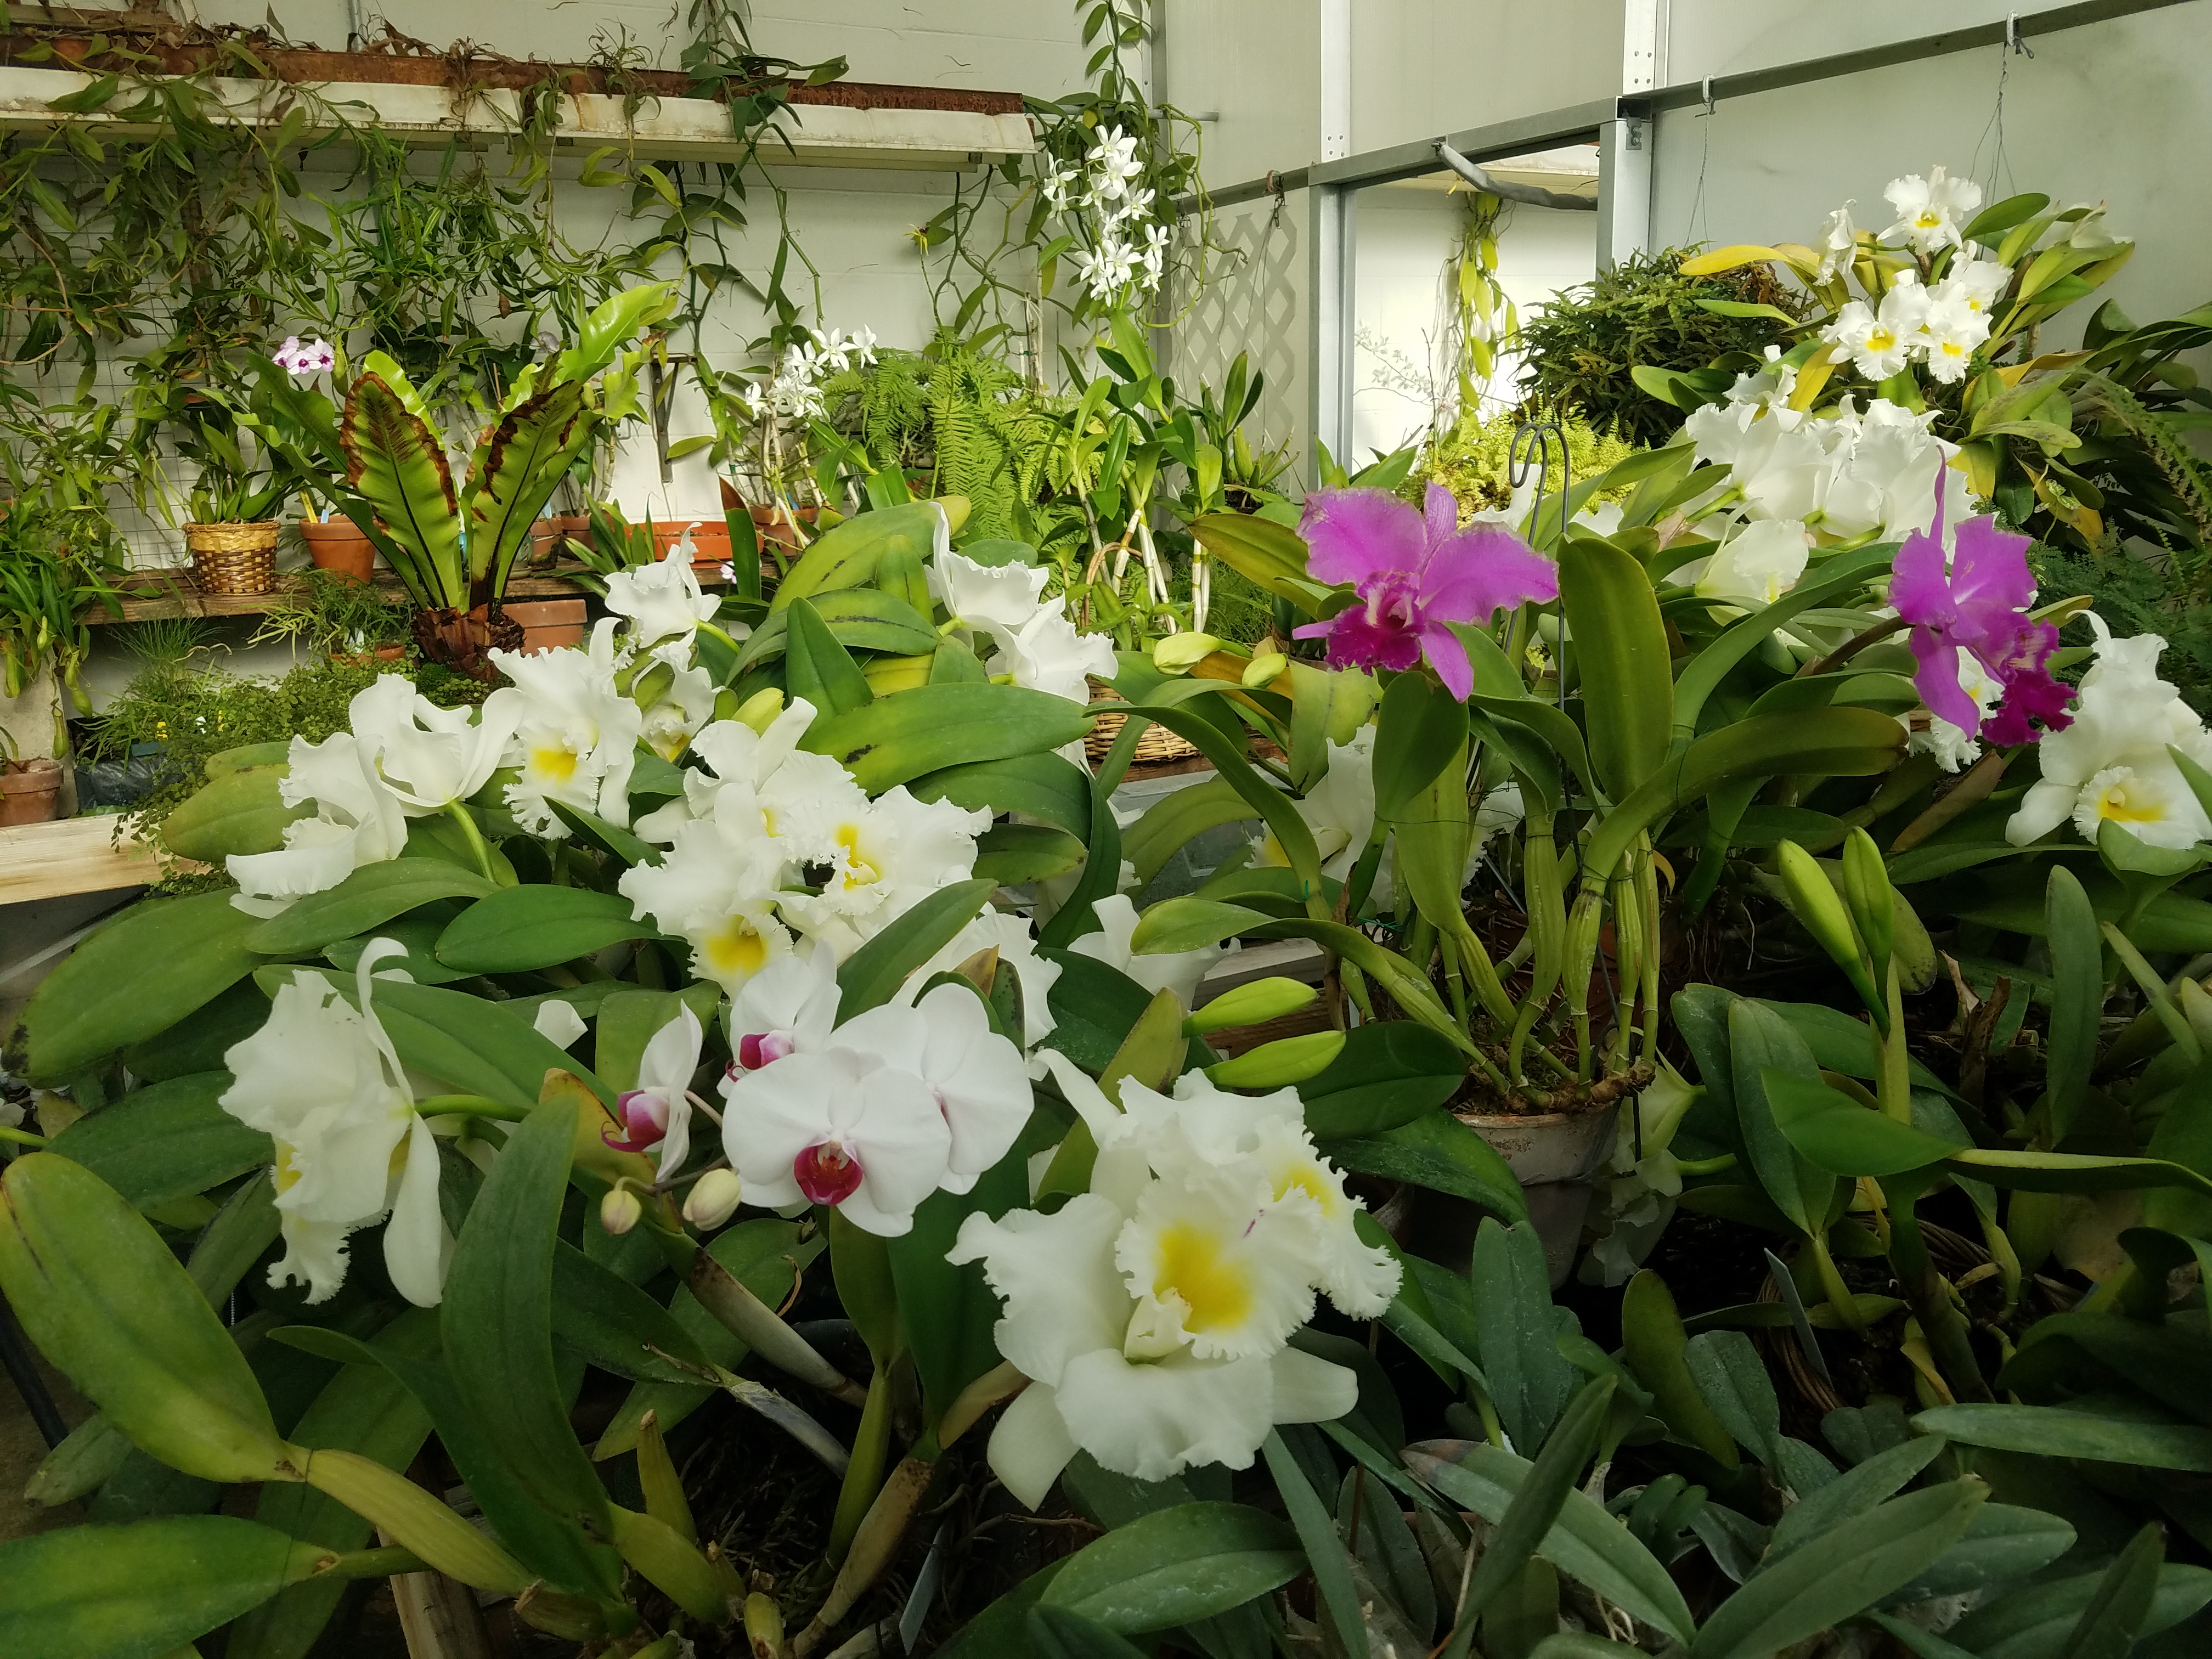 Plants inside the greenhouse